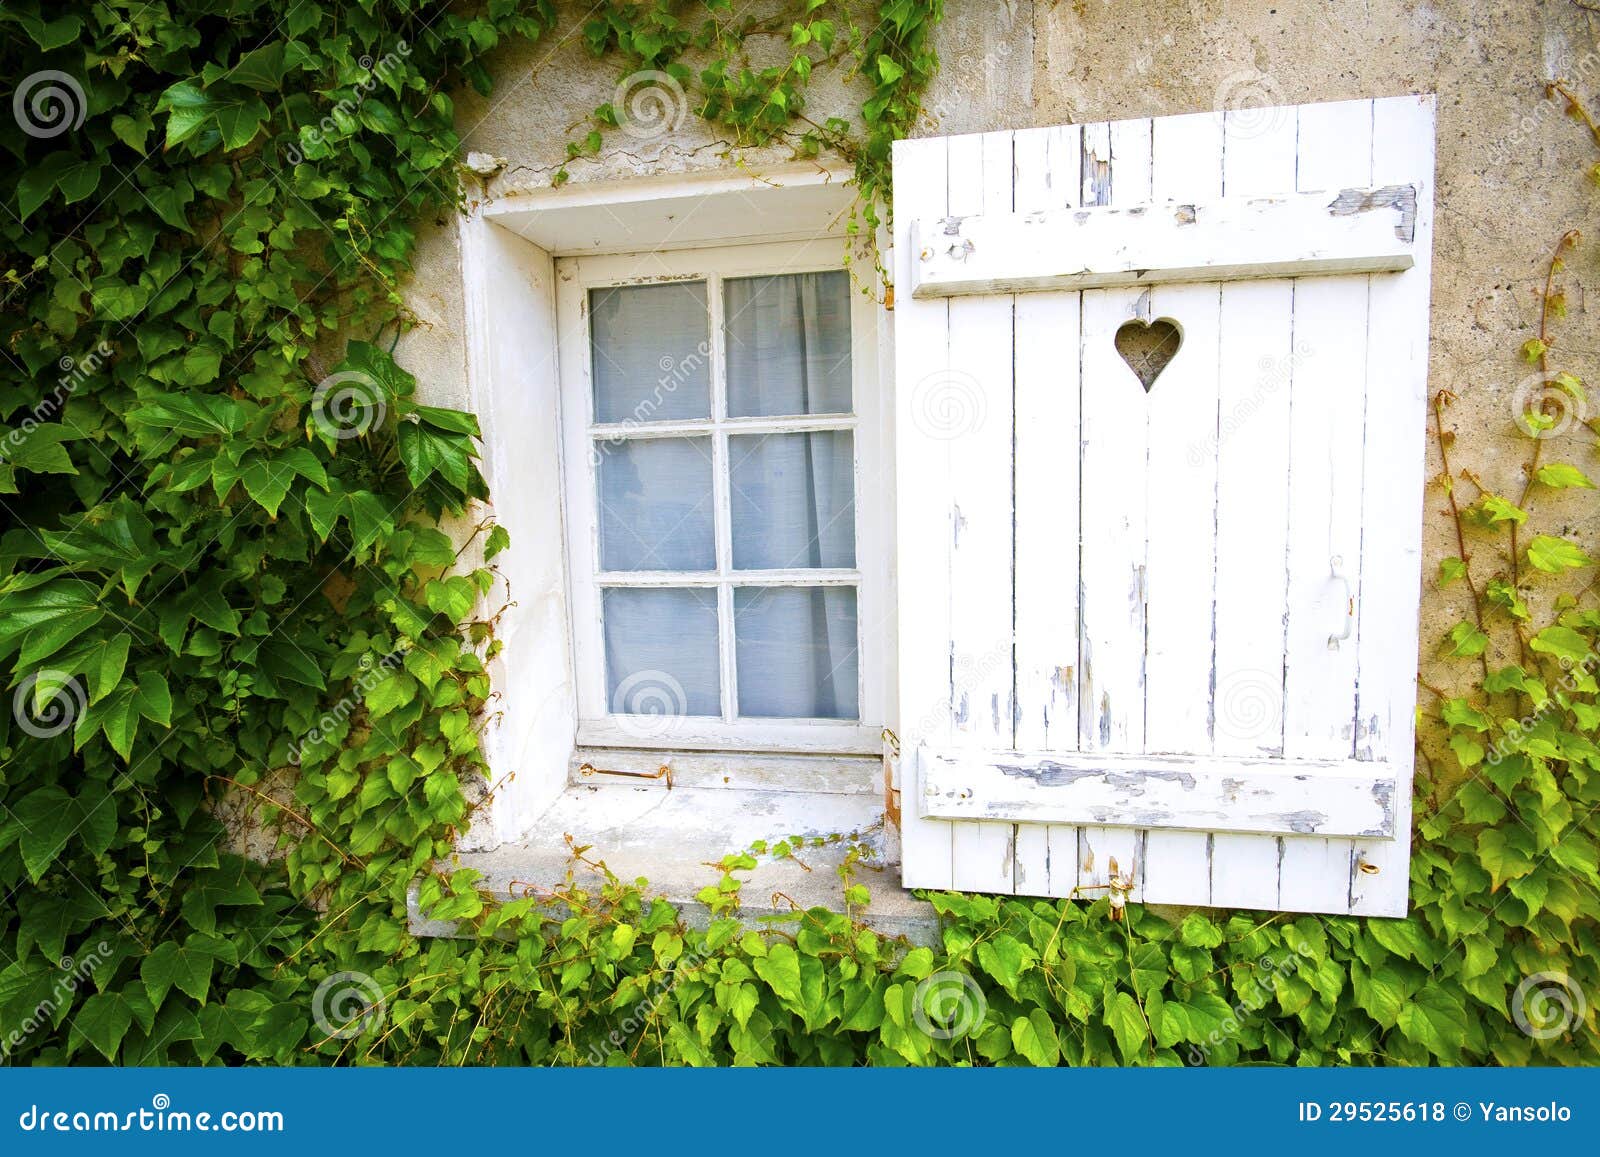 french rustic window